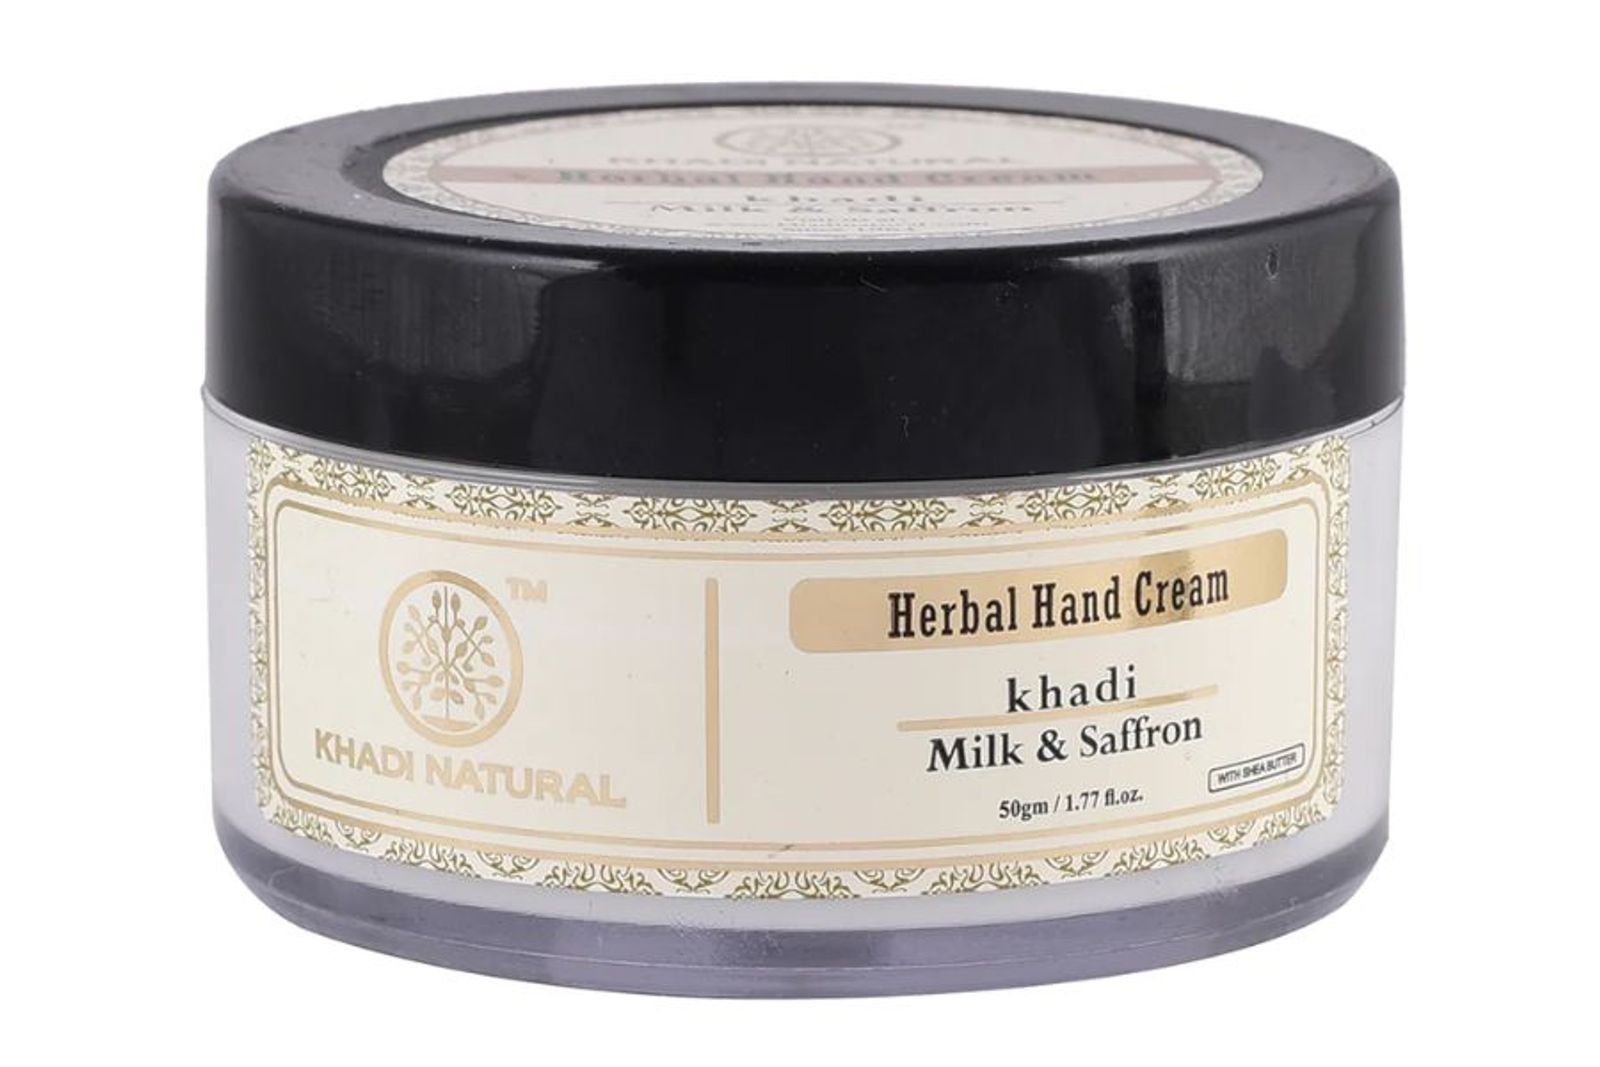 Khadi Natural Hand Cream Milk & Saffron